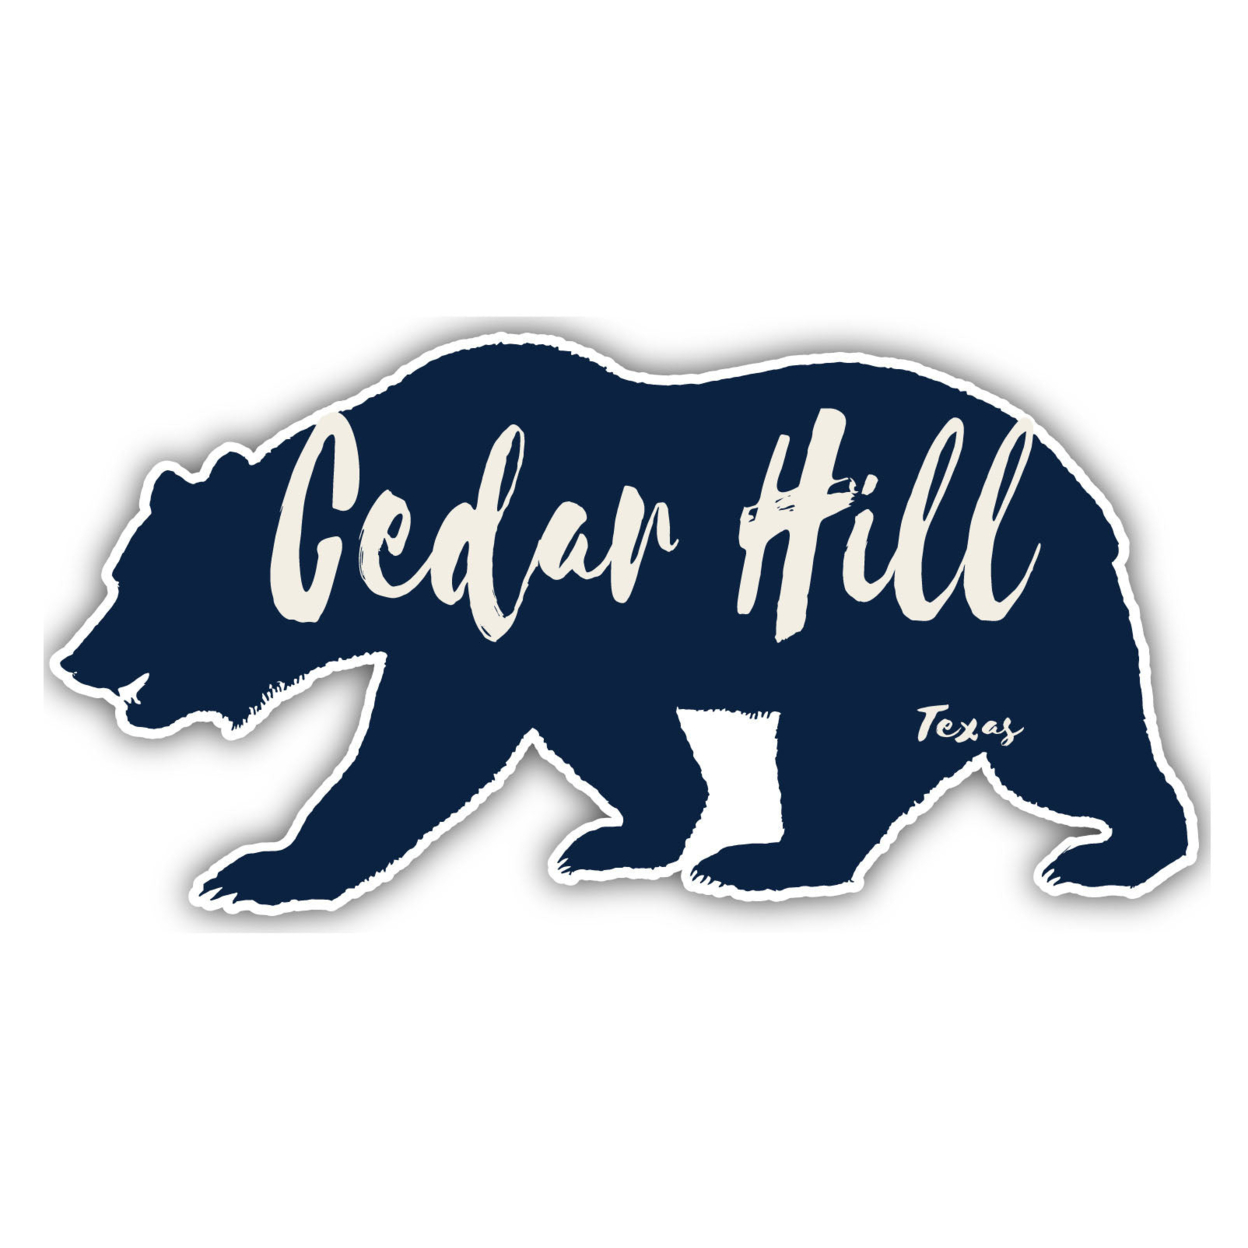 Cedar Hill Texas Souvenir Decorative Stickers (Choose Theme And Size) - 4-Pack, 12-Inch, Bear